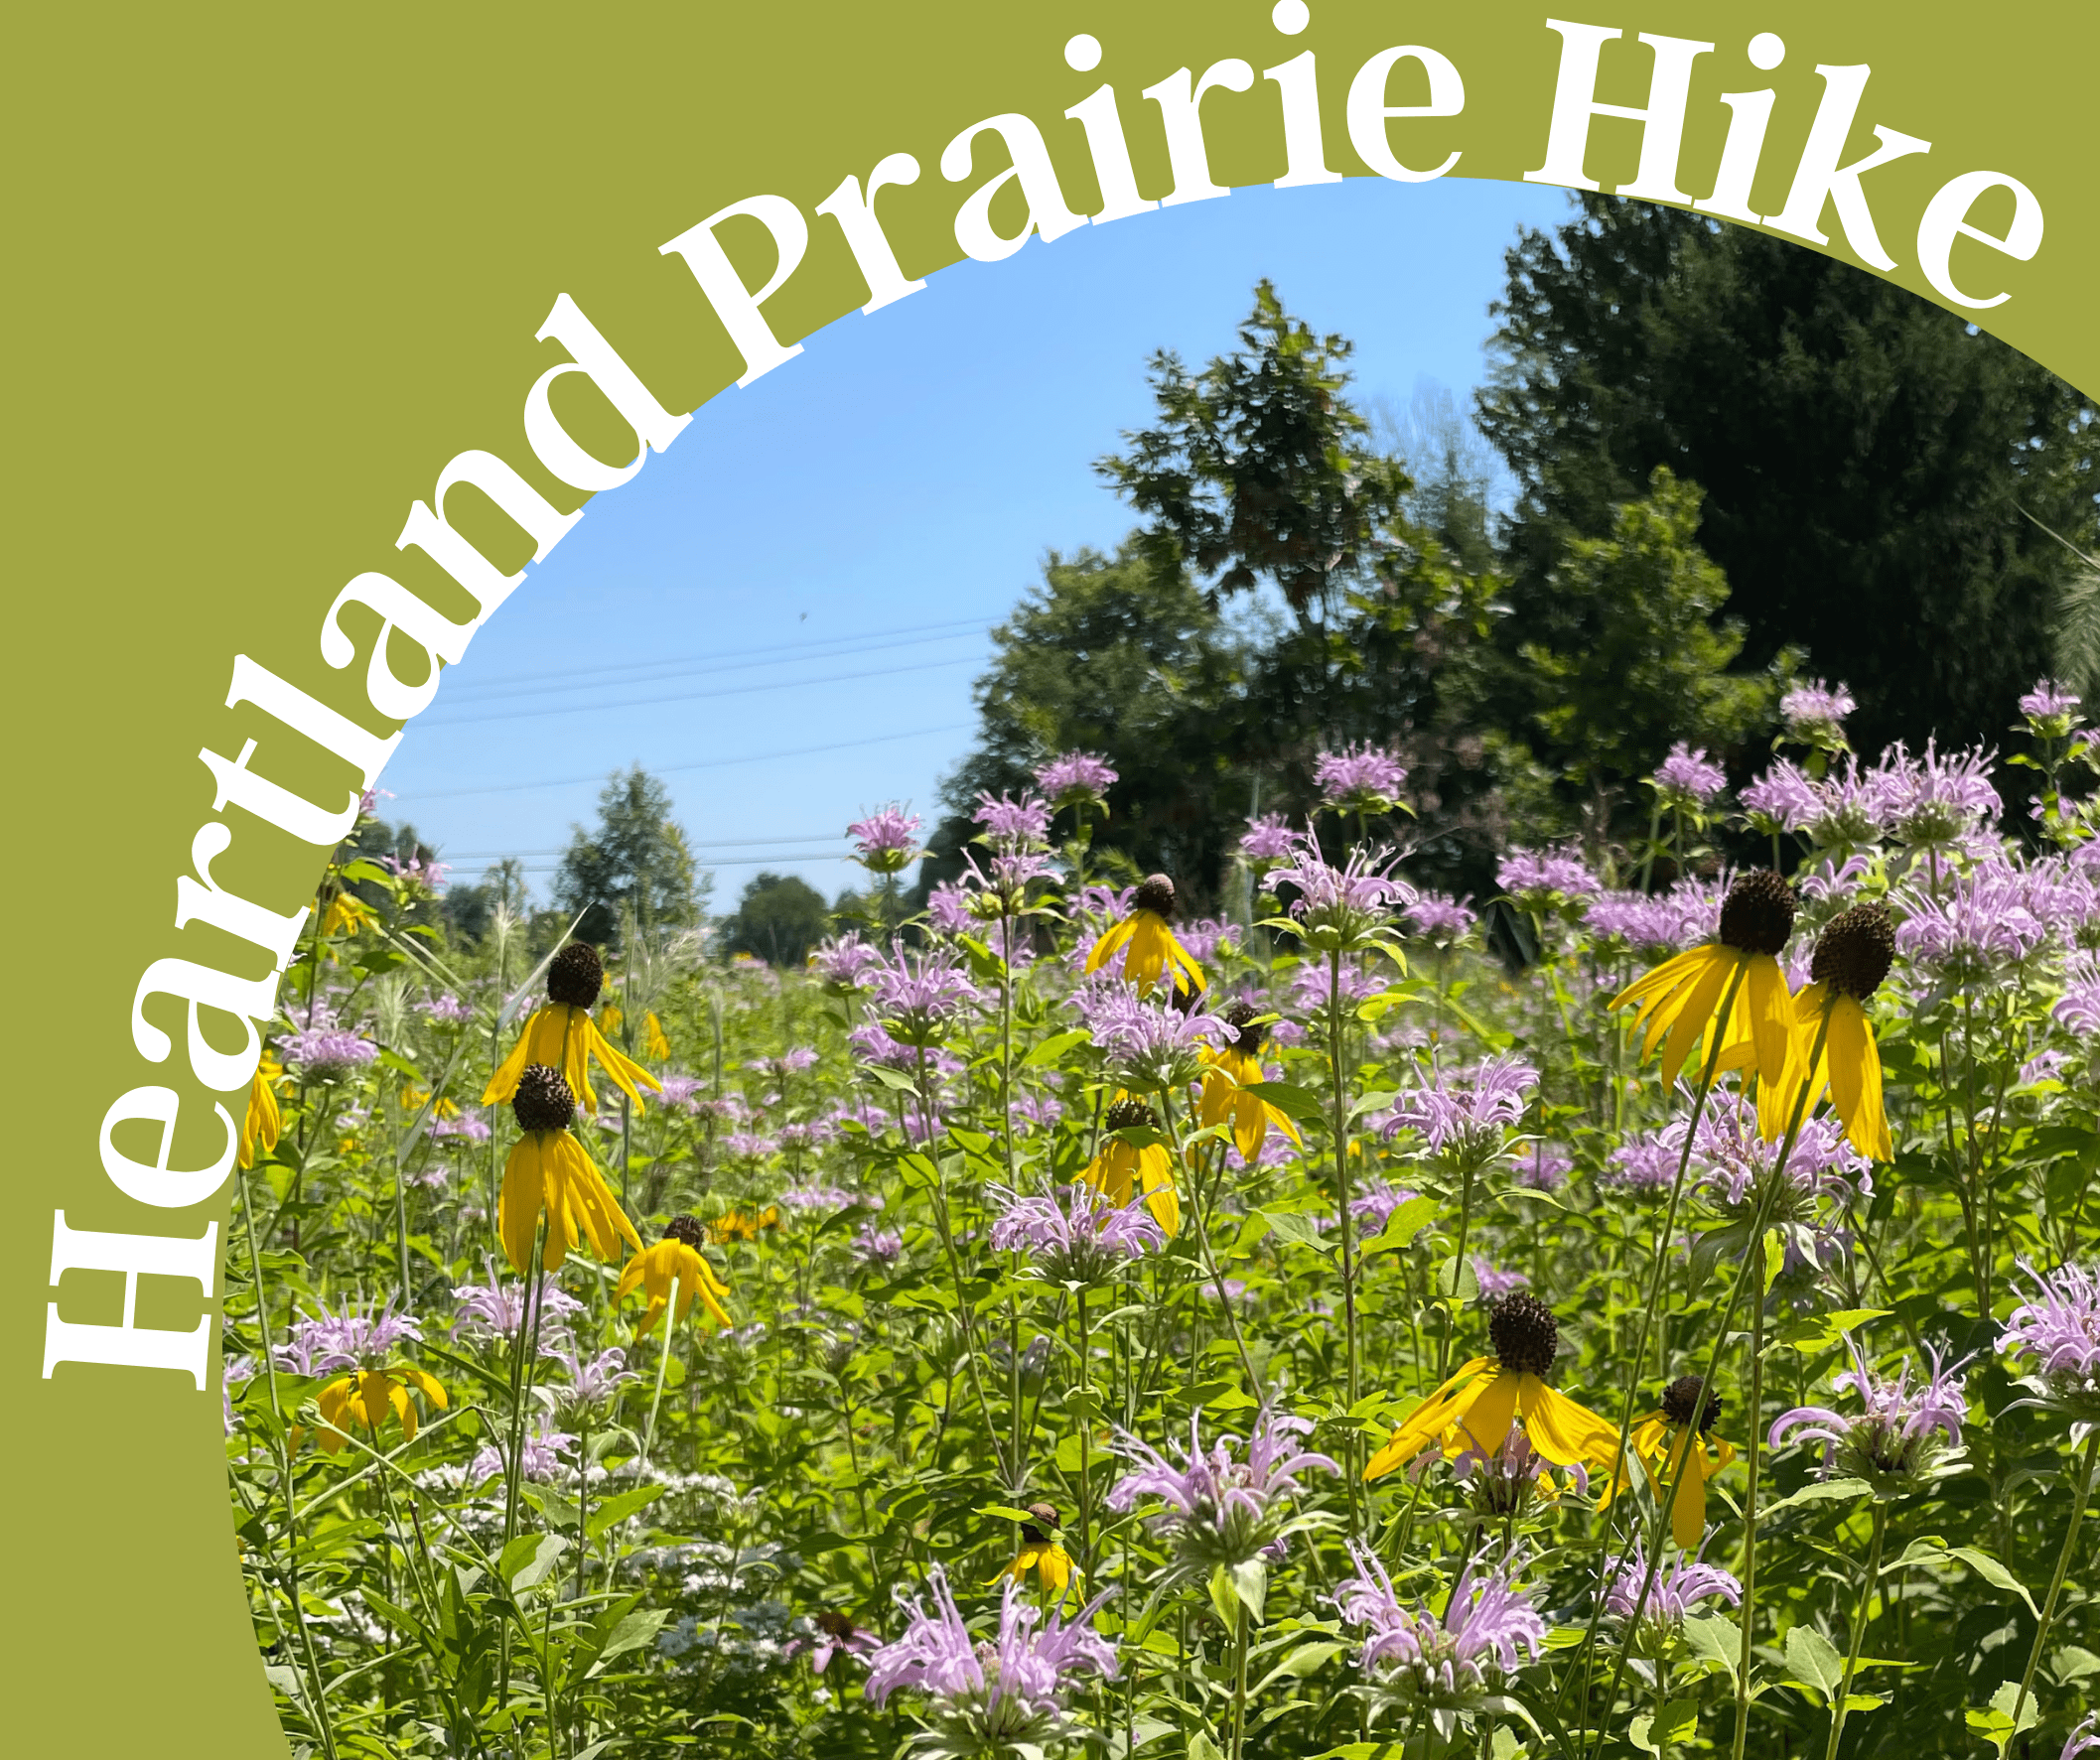 Heartland Prairie Hike